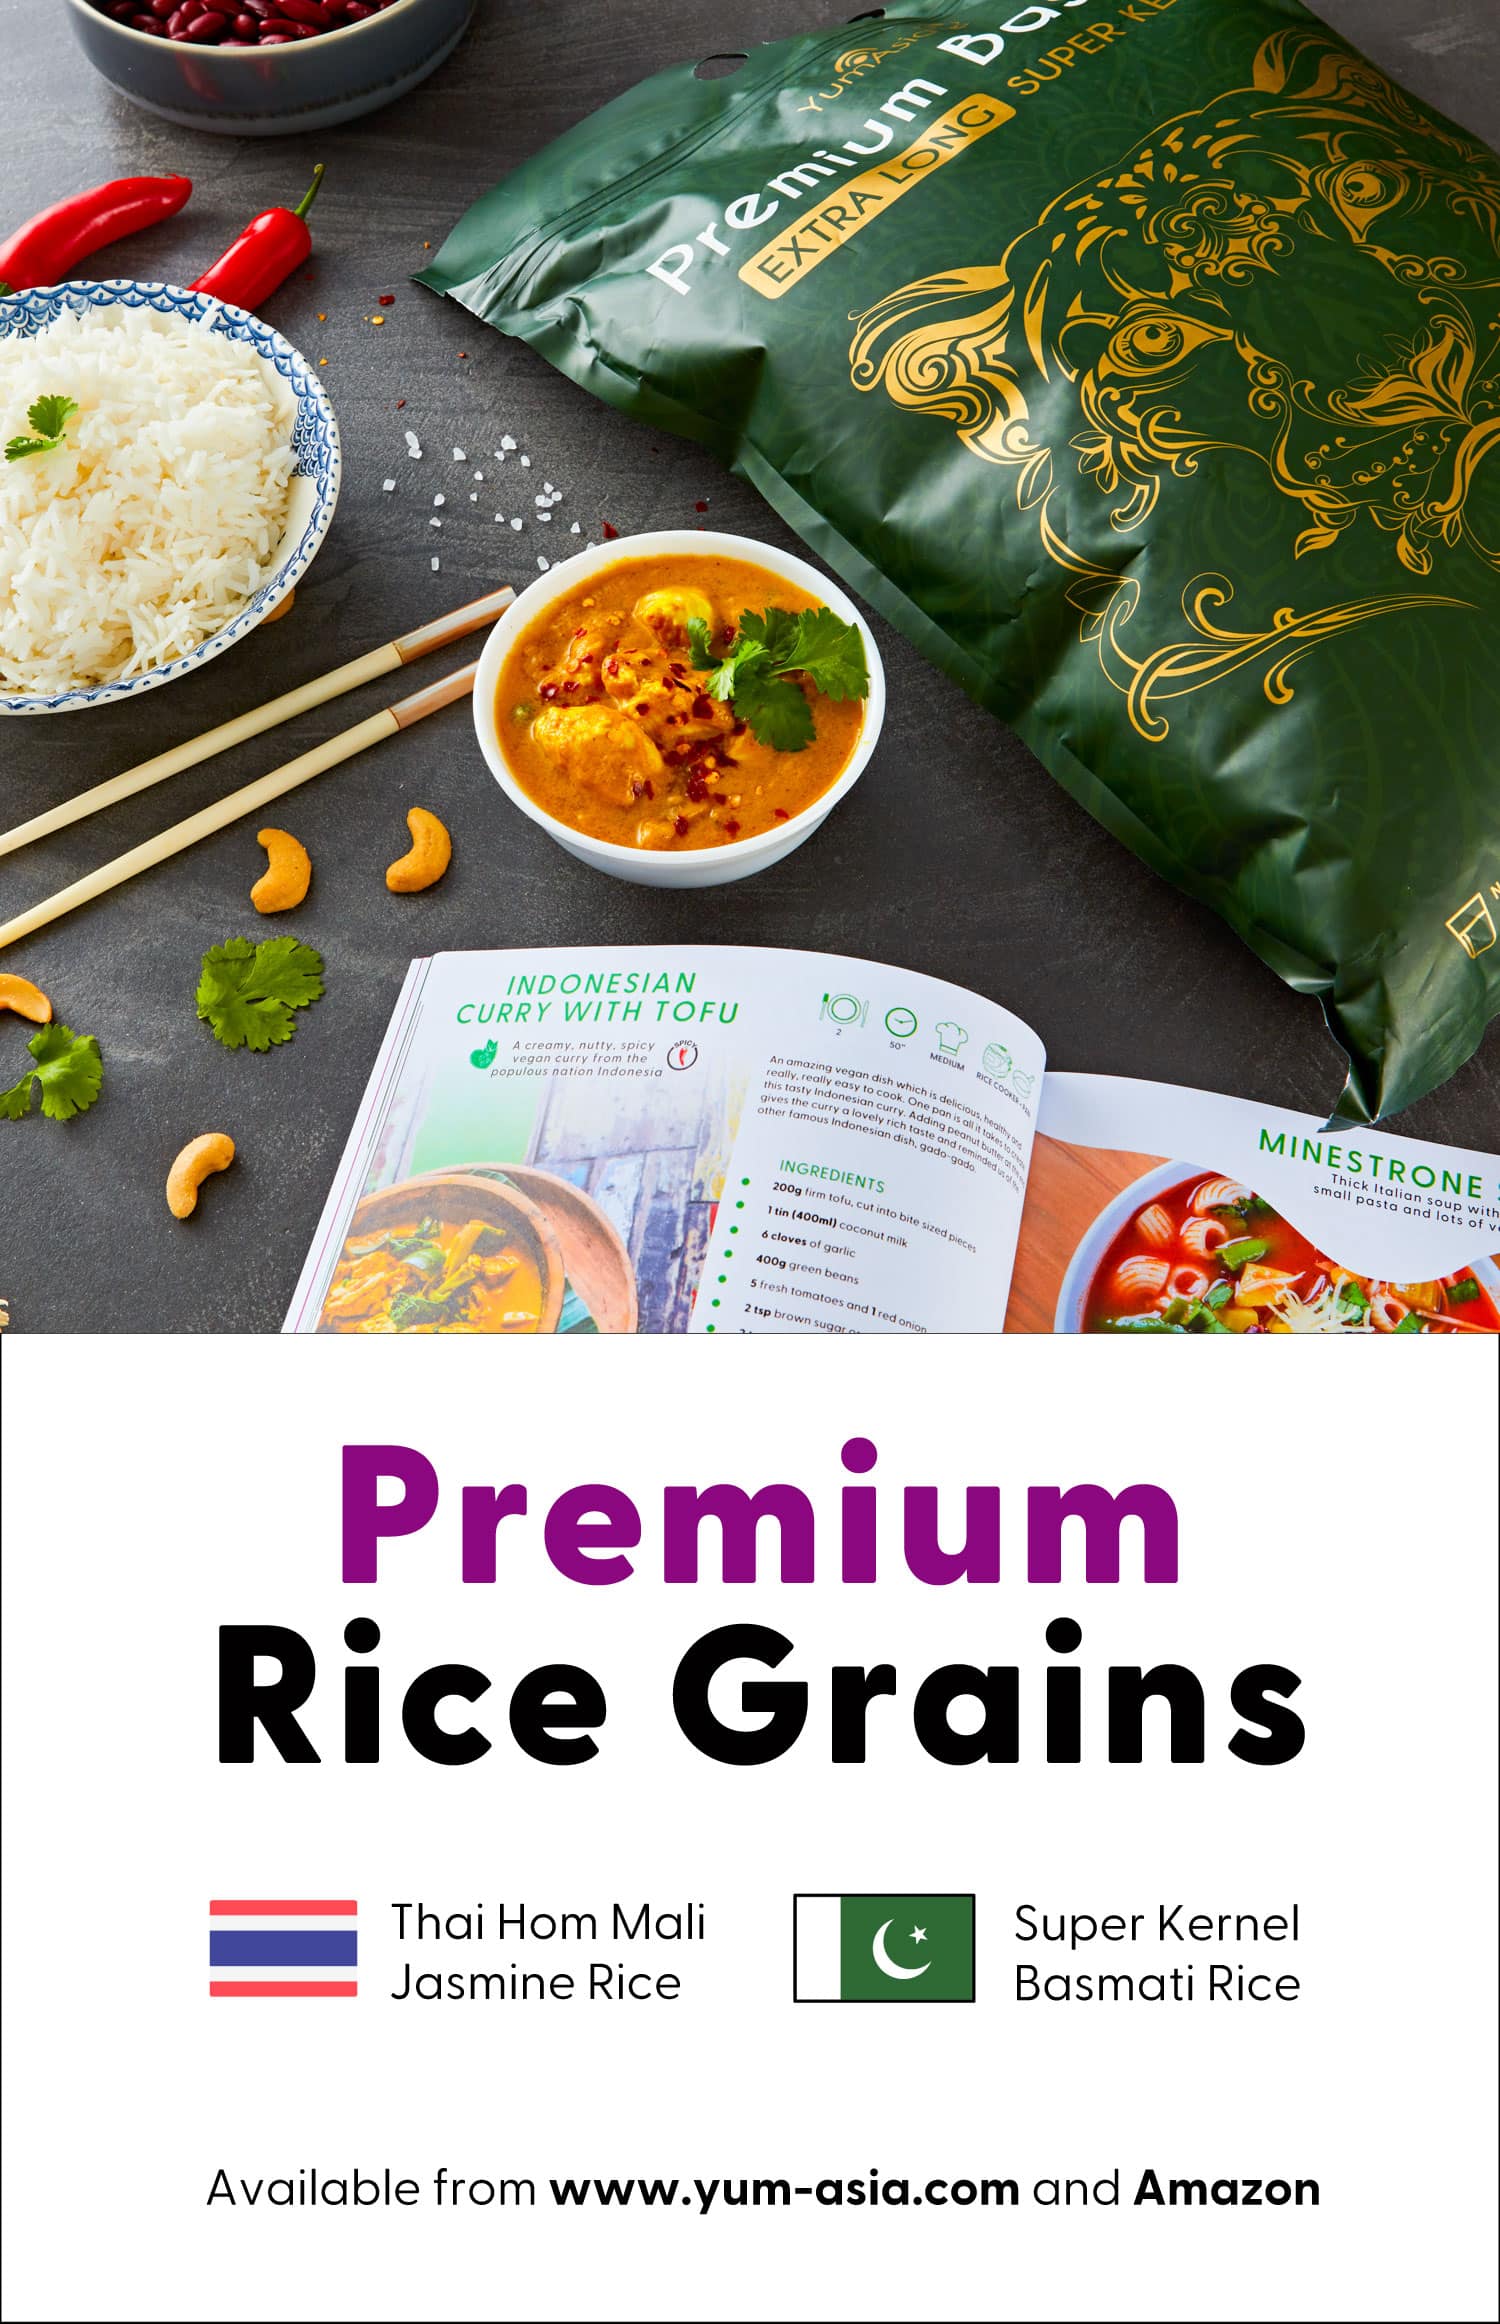 Premium Rice Grains by Yum Asia